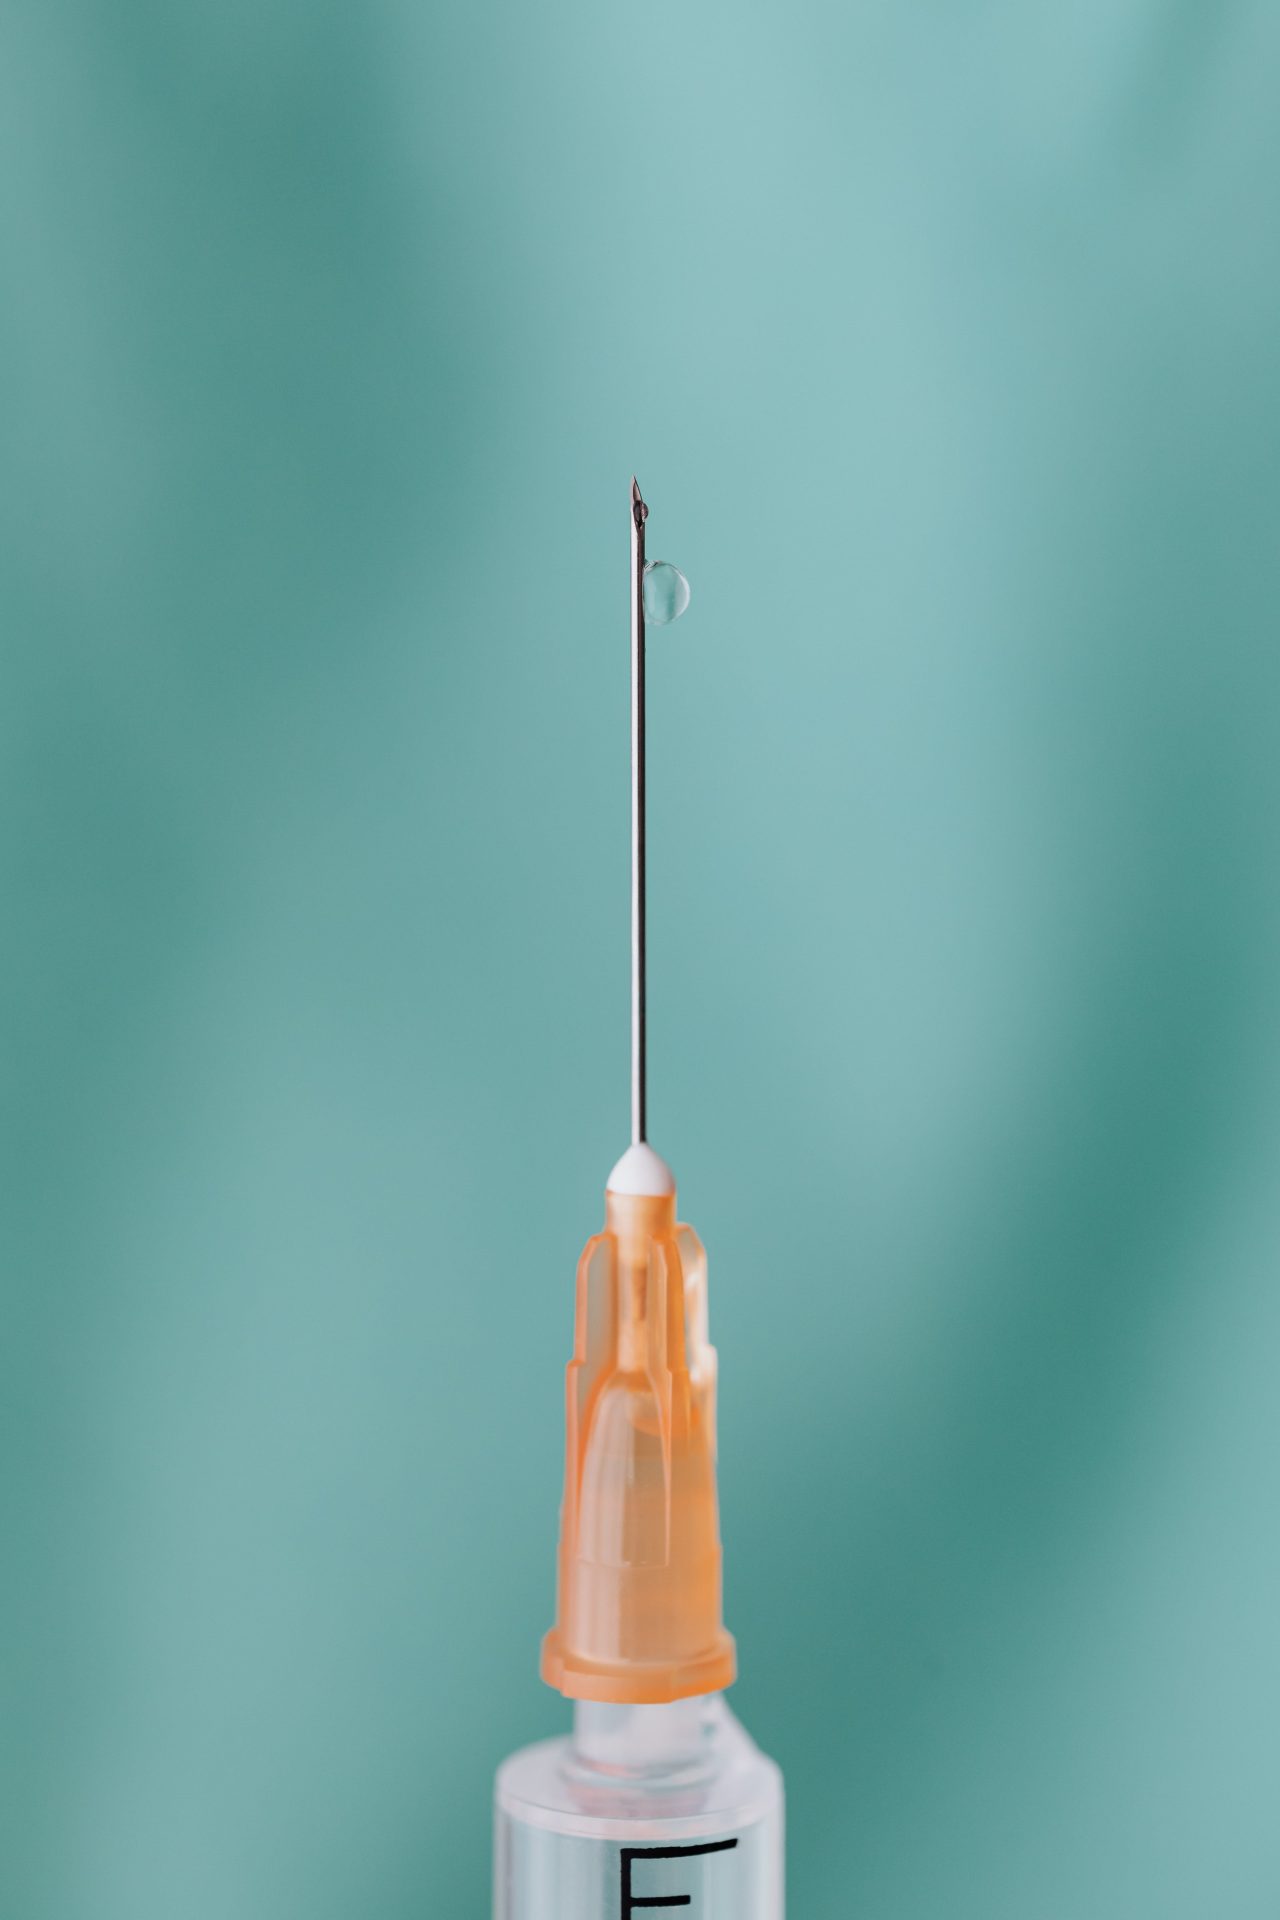 slam chemsex injection 3-MMC cathinones seringue